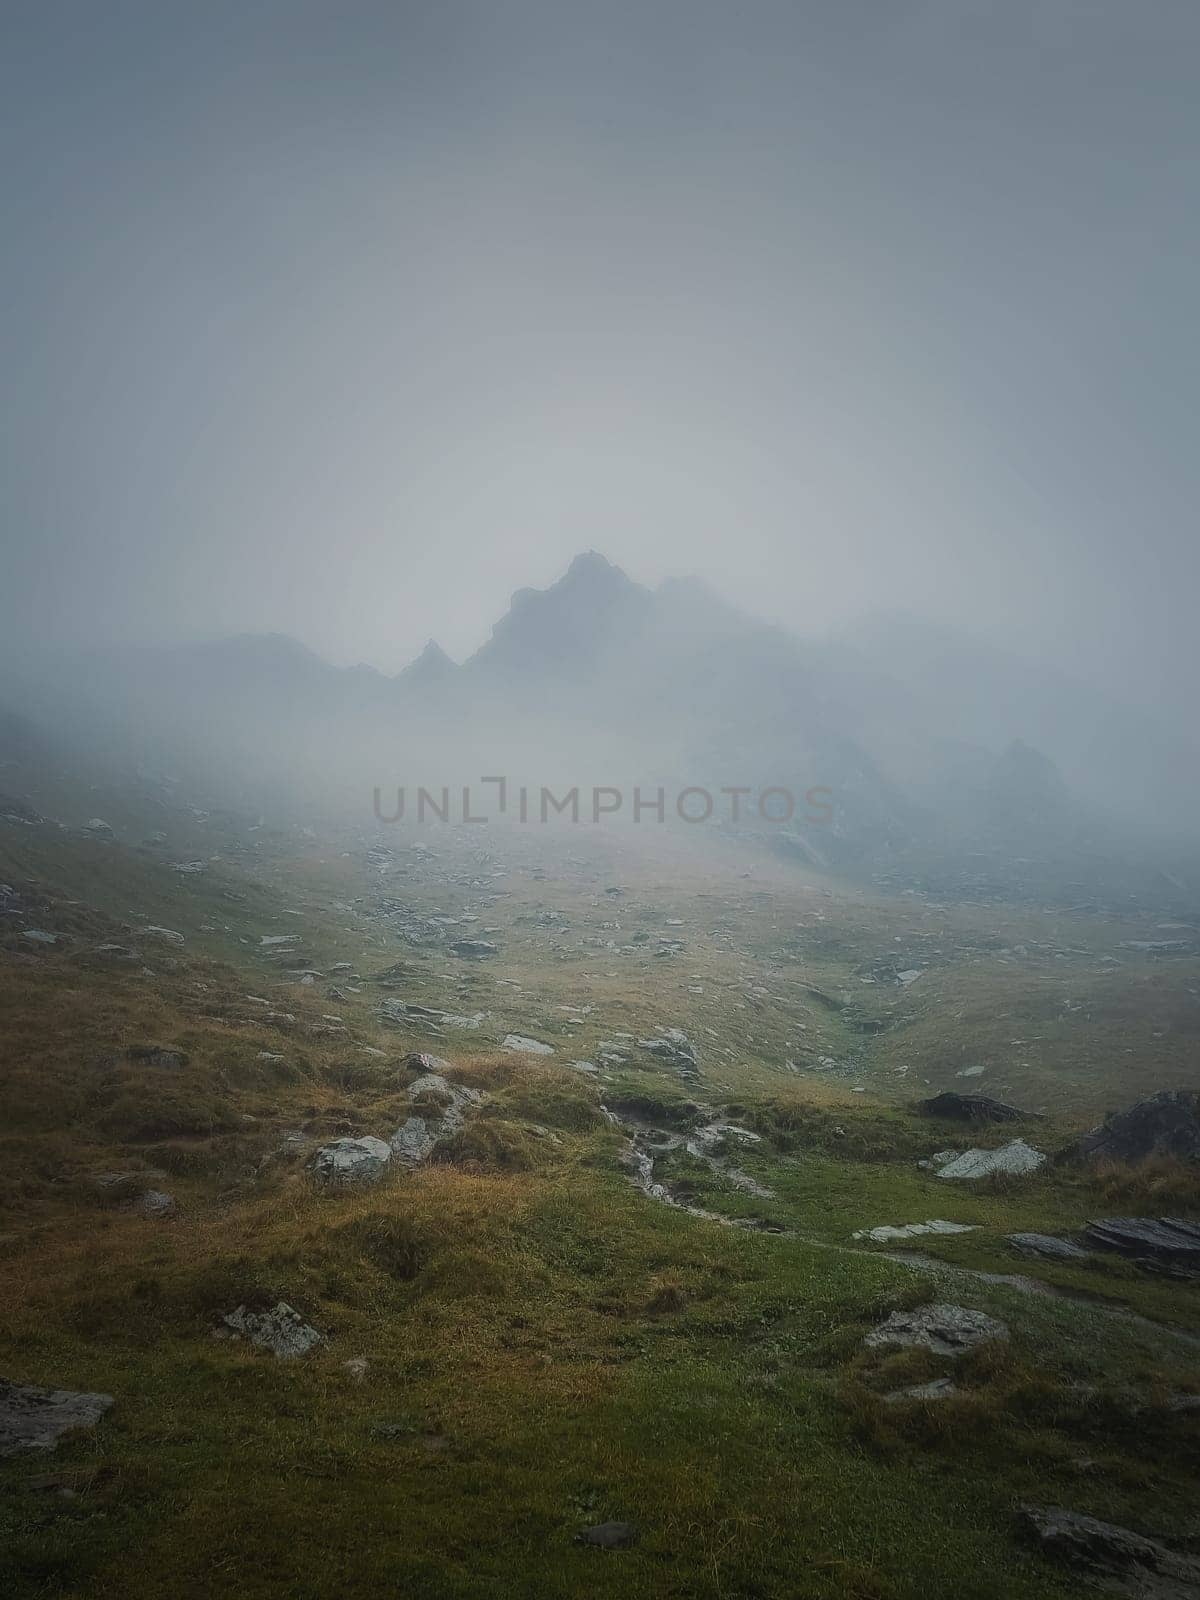 Transfagarasan mountain peak seen through the dense fog. Rainy scene in the mounts, hiking in the mist by psychoshadow